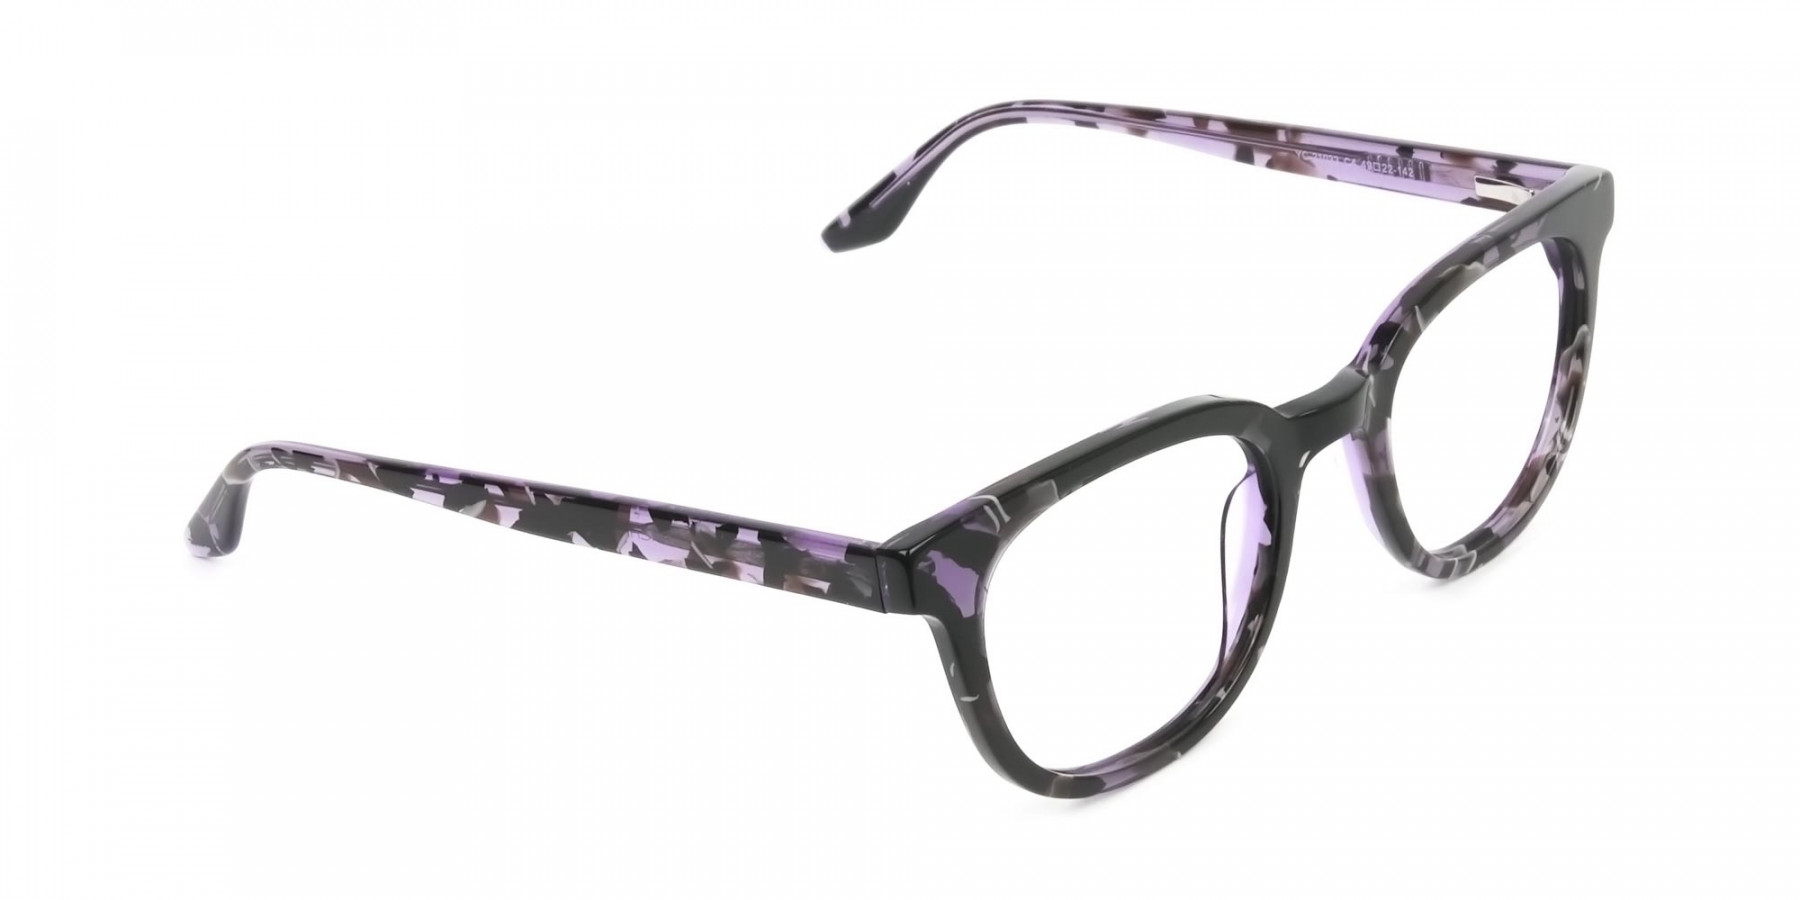 Hipster Thick Frame Tortoise Pastel Purple Glasses For Women - 1